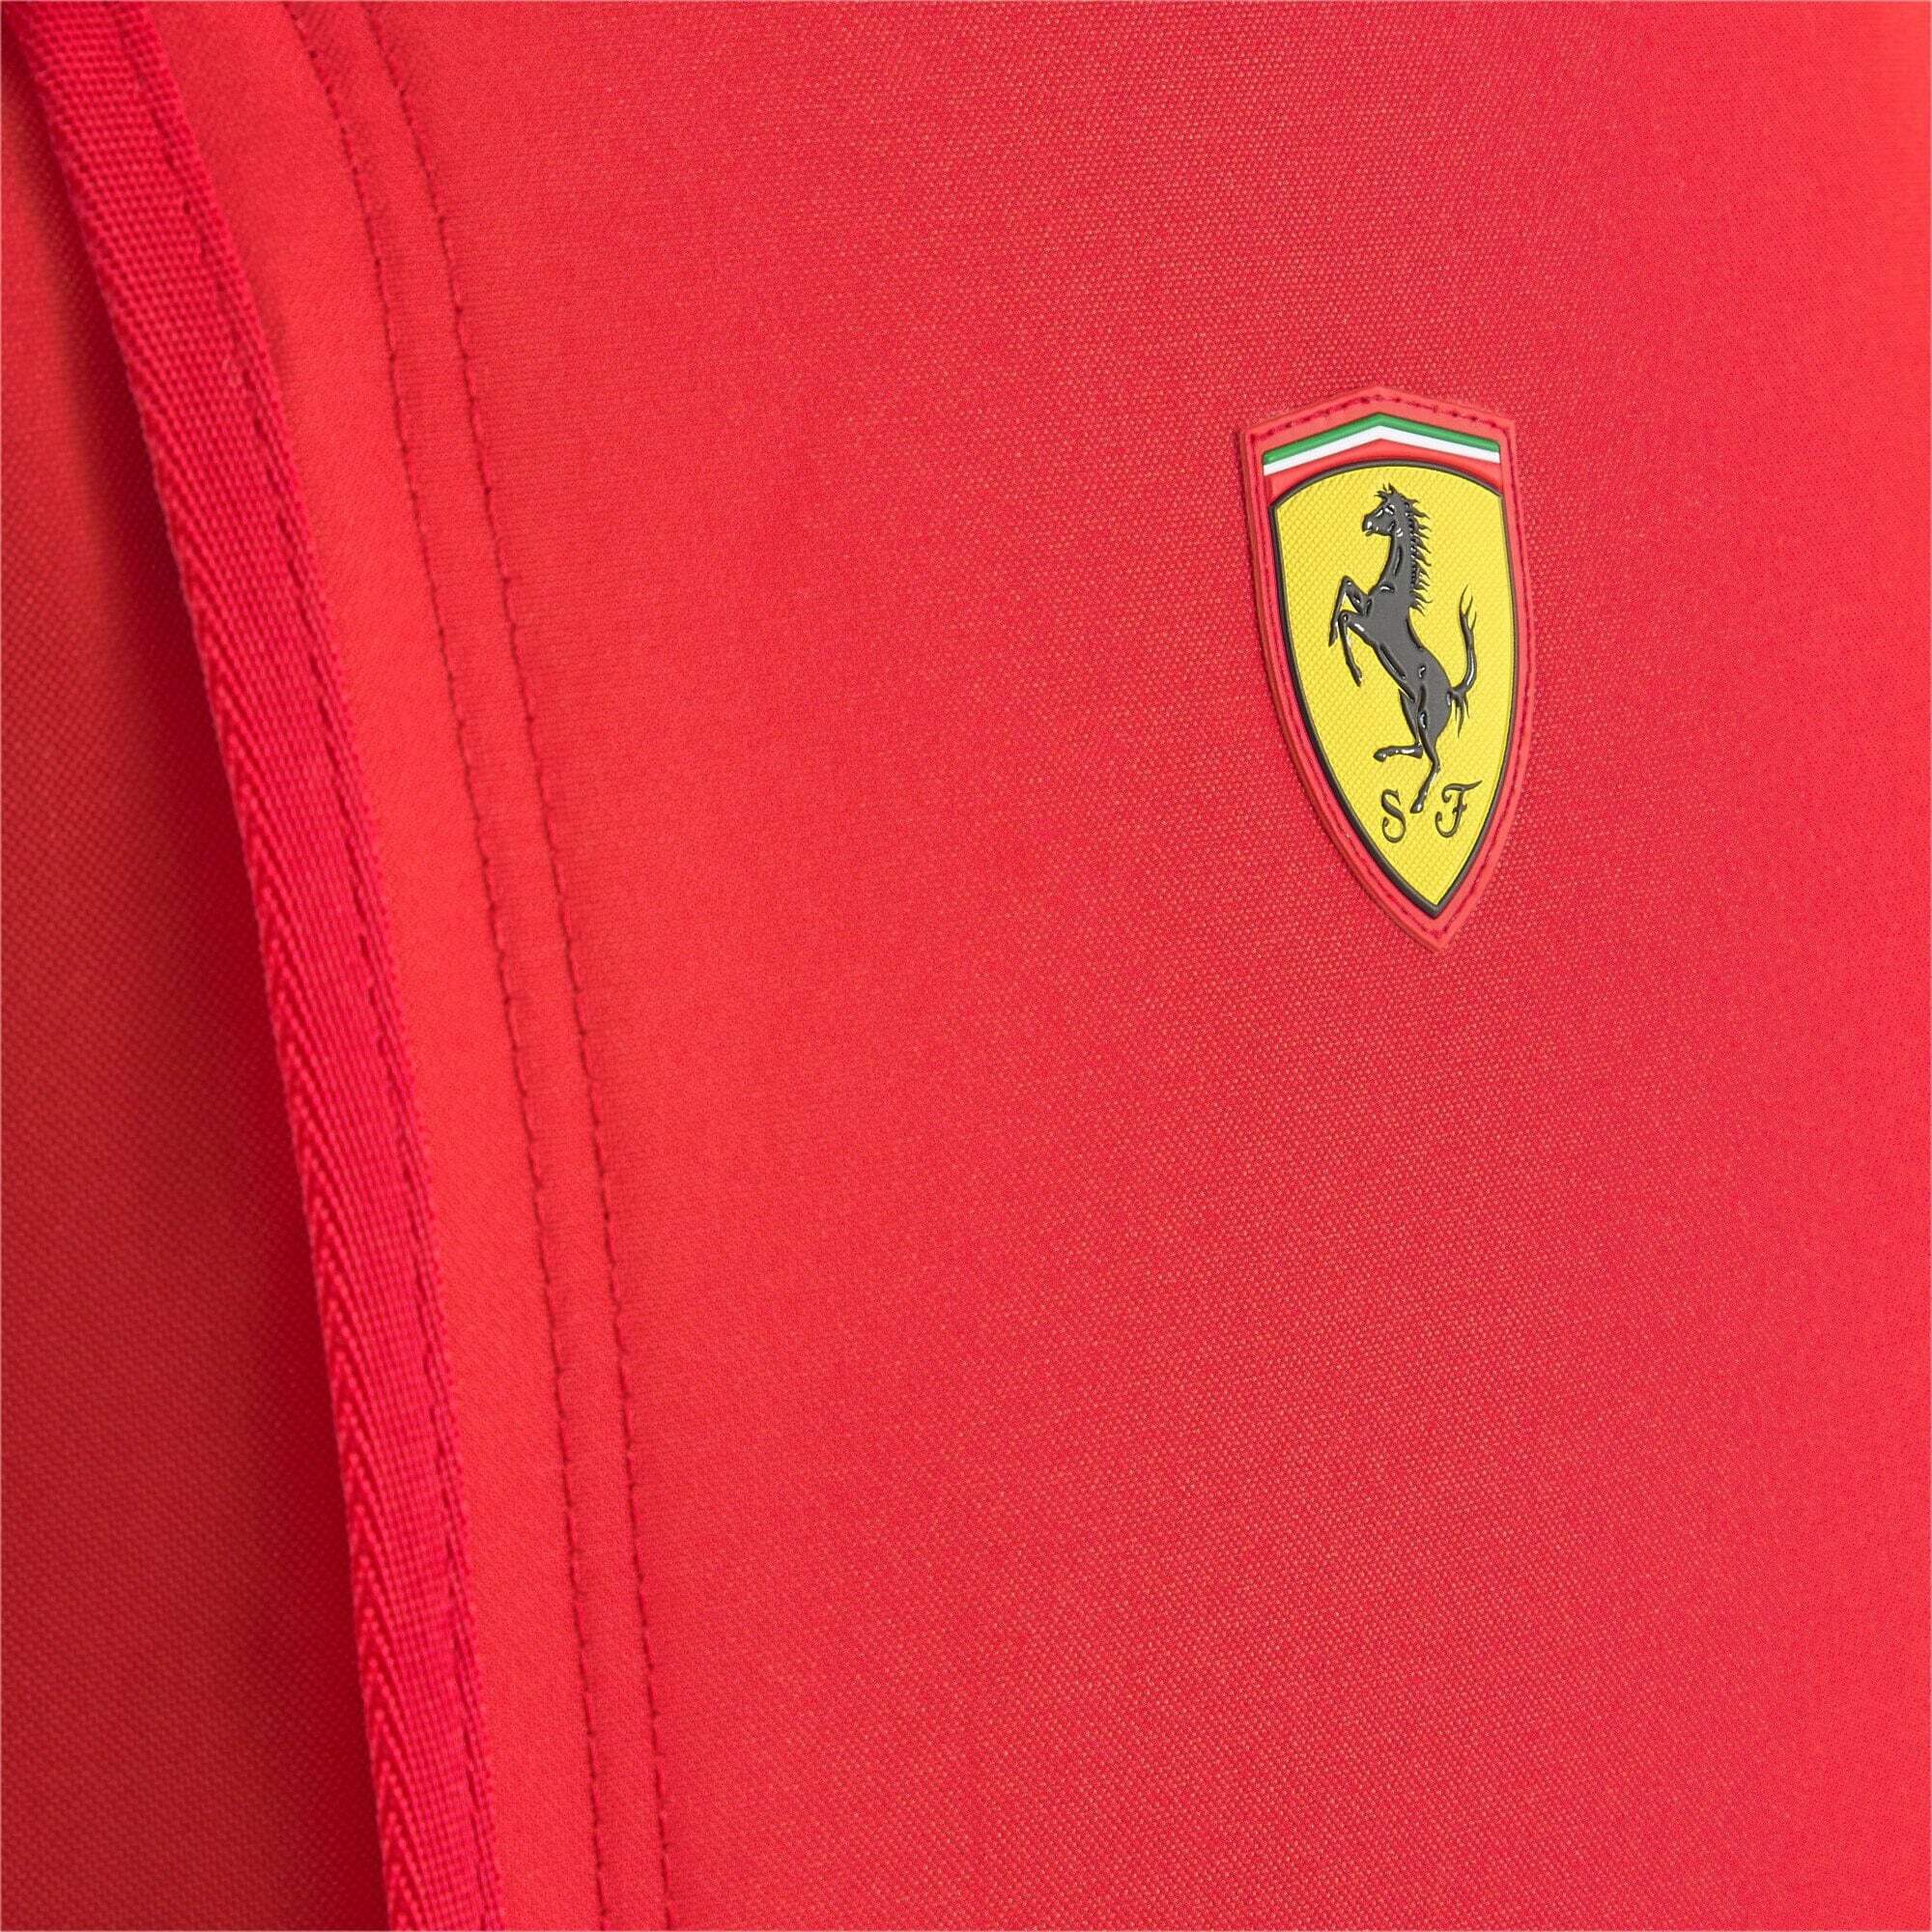 Scuderia Ferrari F1 Puma Race Backpack - image 3 of 6